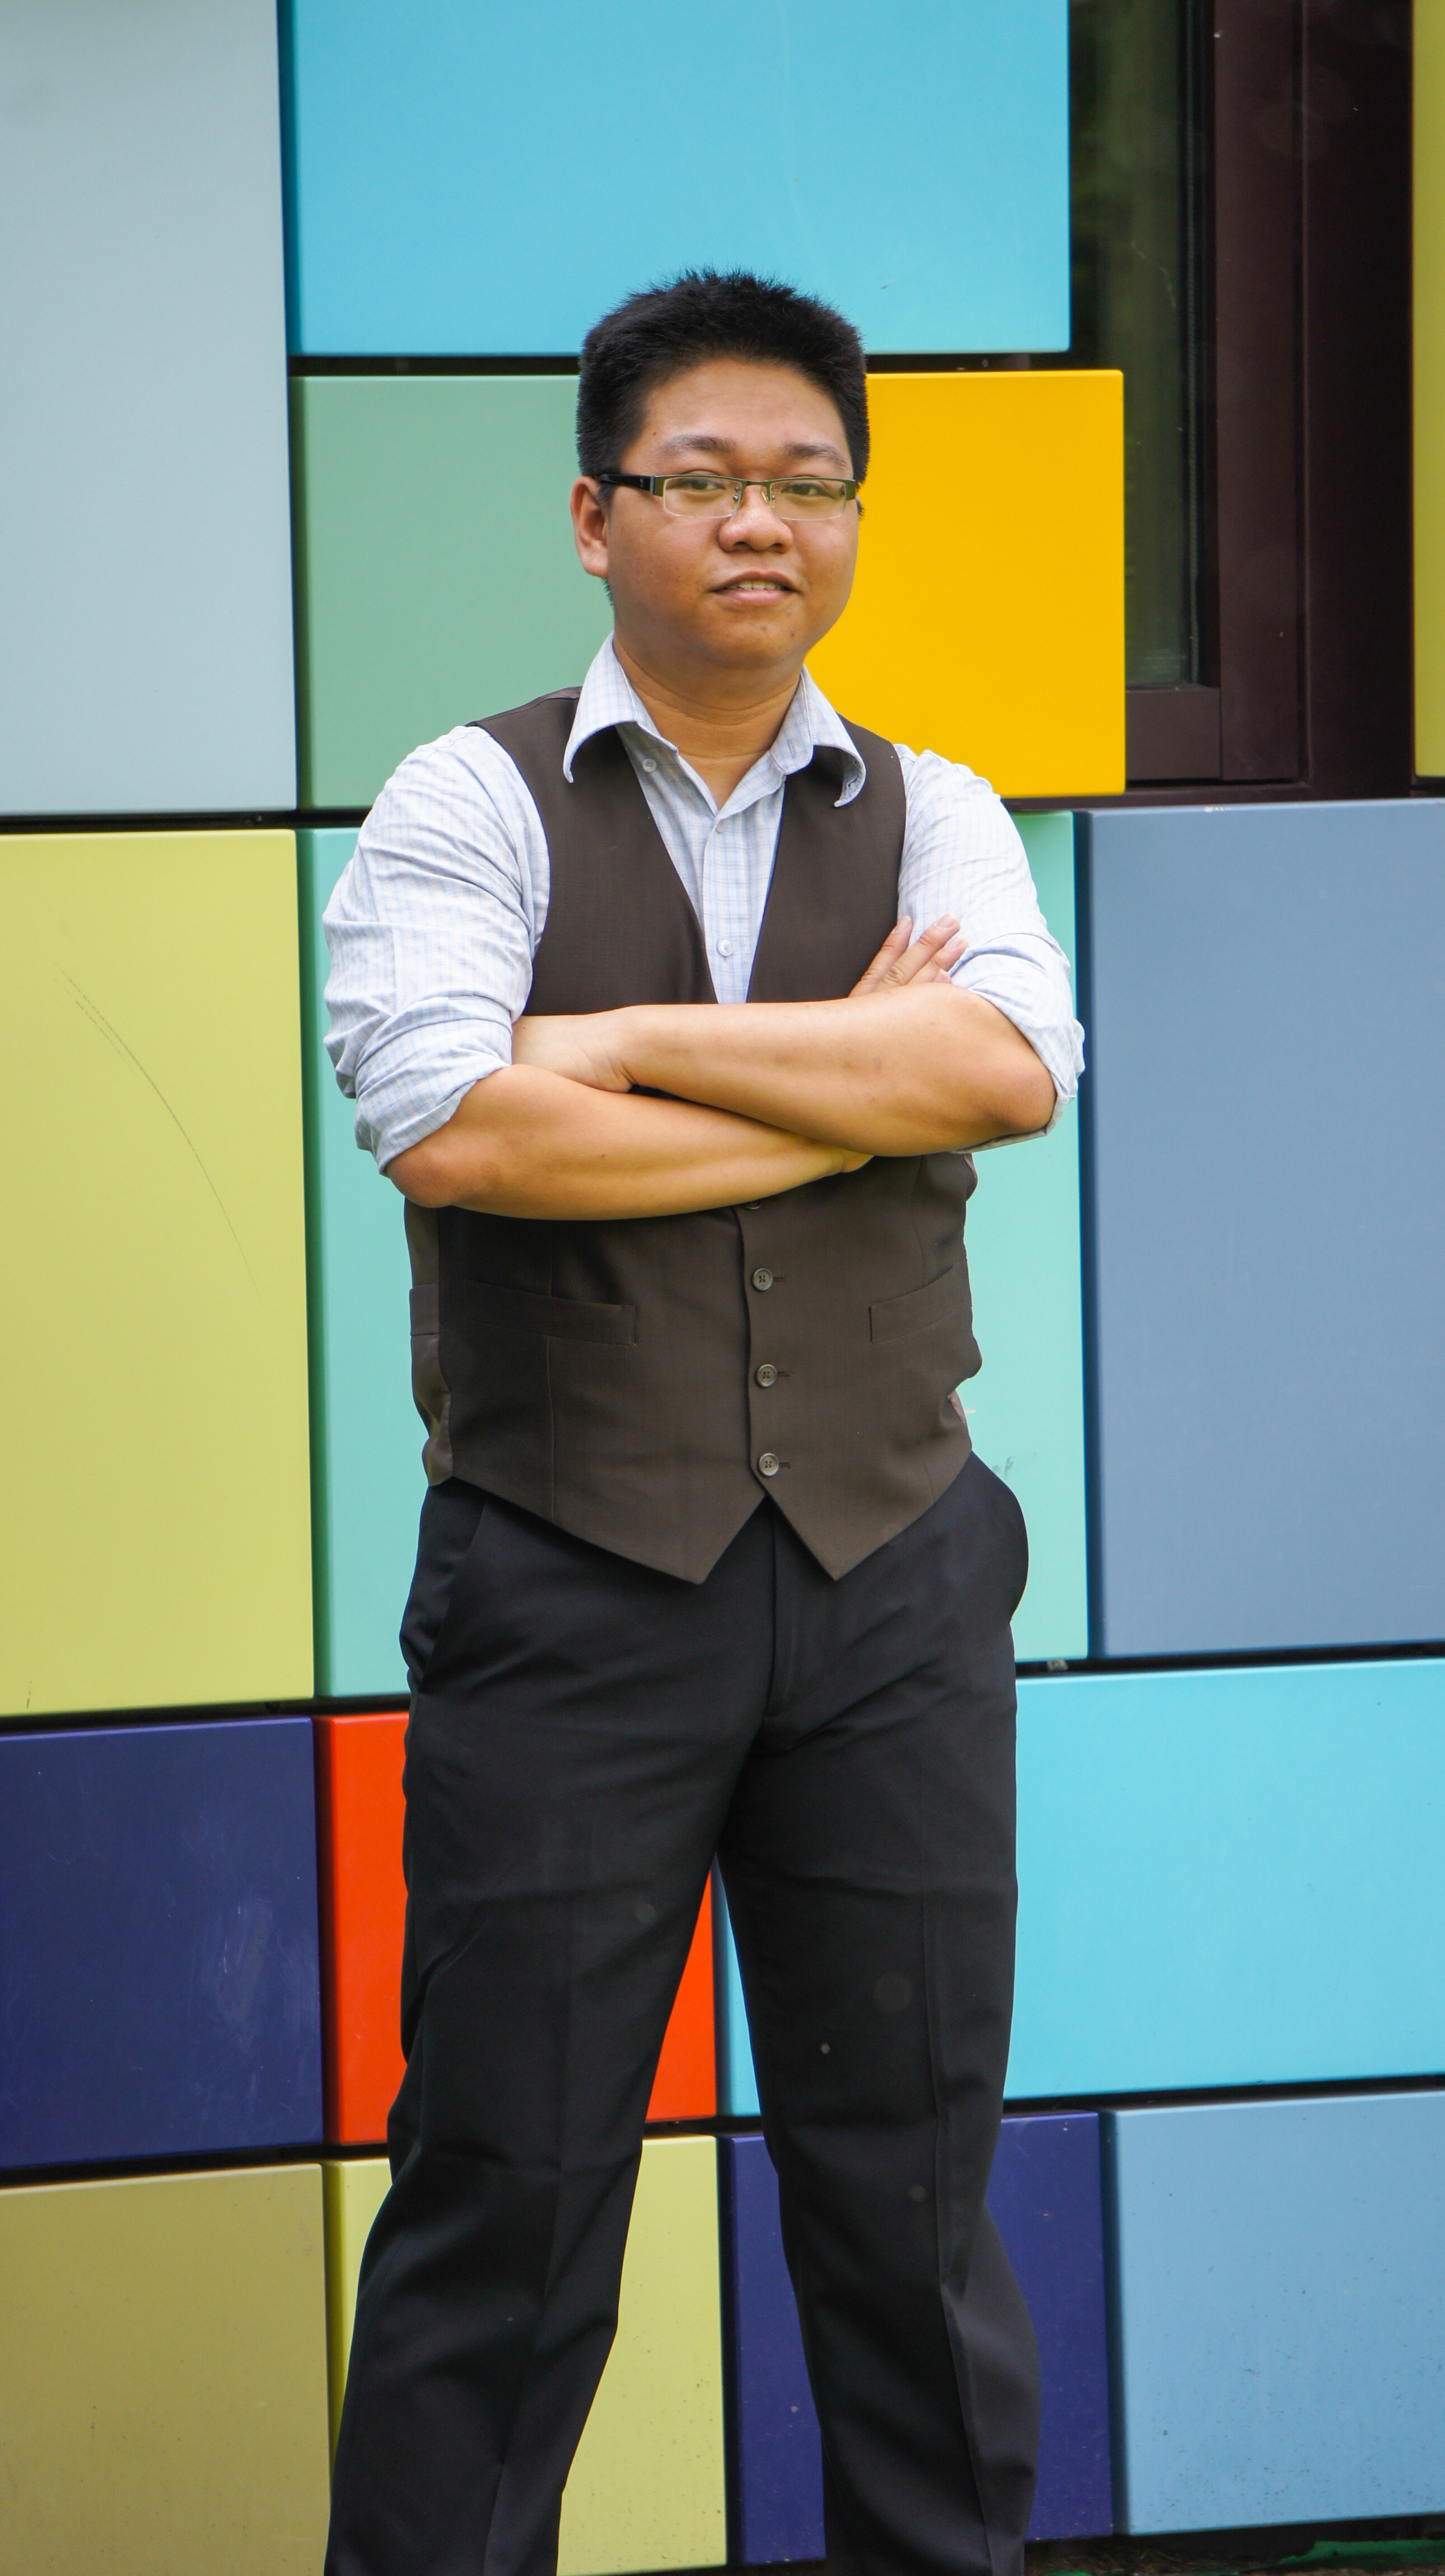 Austin Nguyen